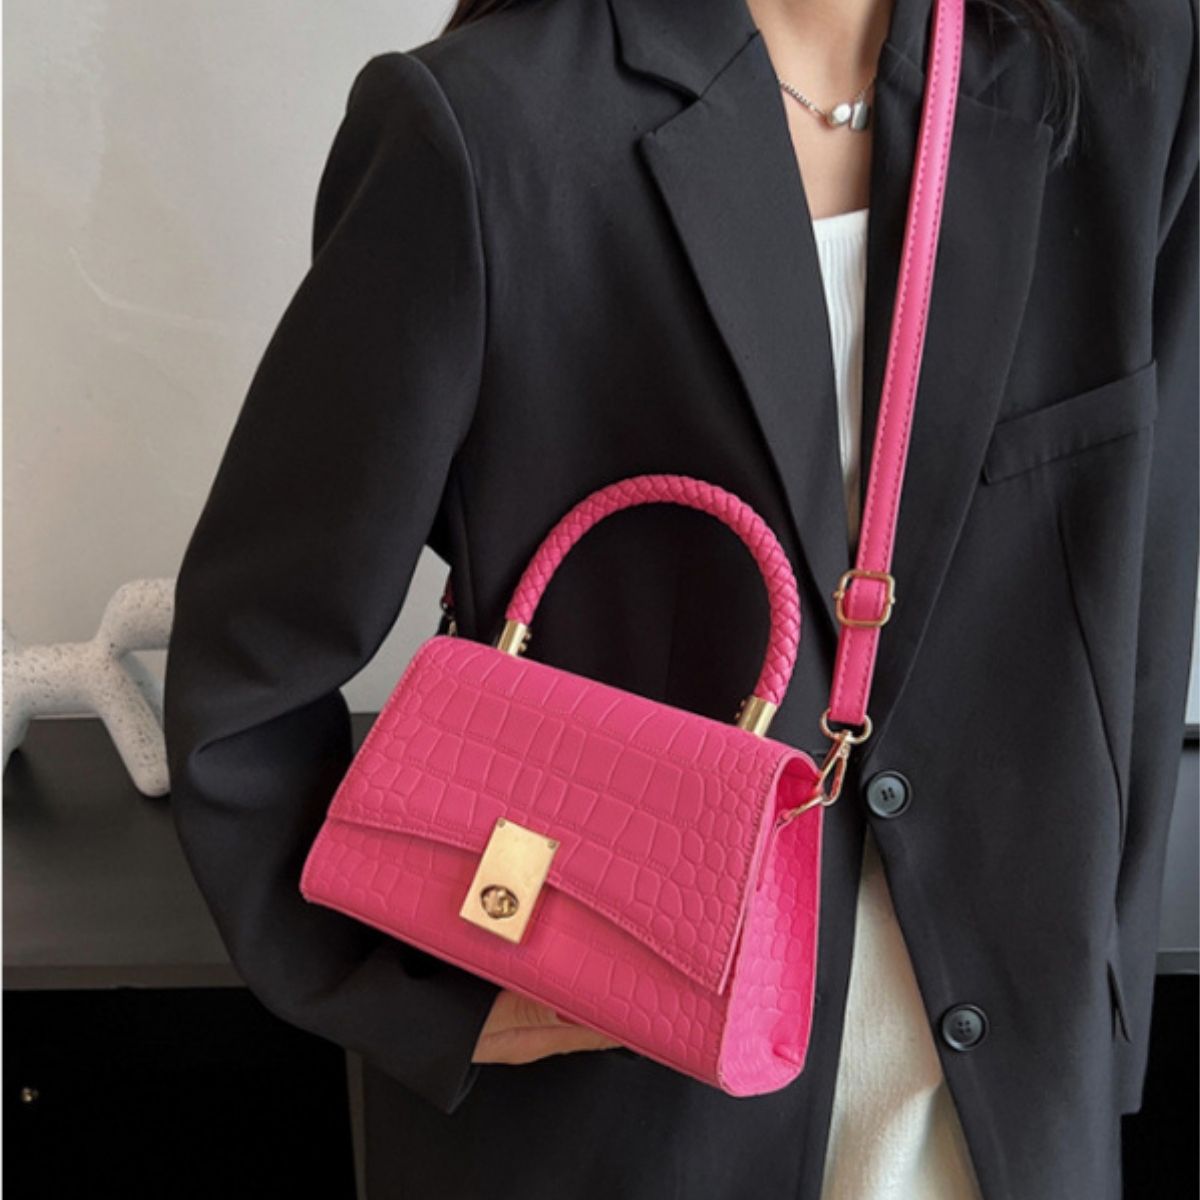 bolsa feminina, bolsa com textura, bolsa croco, bolsa quadrada, bolsa pink, bolsa laranja, bolsa branca, bolsa elegante, bolsa chique, bolsa estilosa, bolsa moderna, bolsa colorida